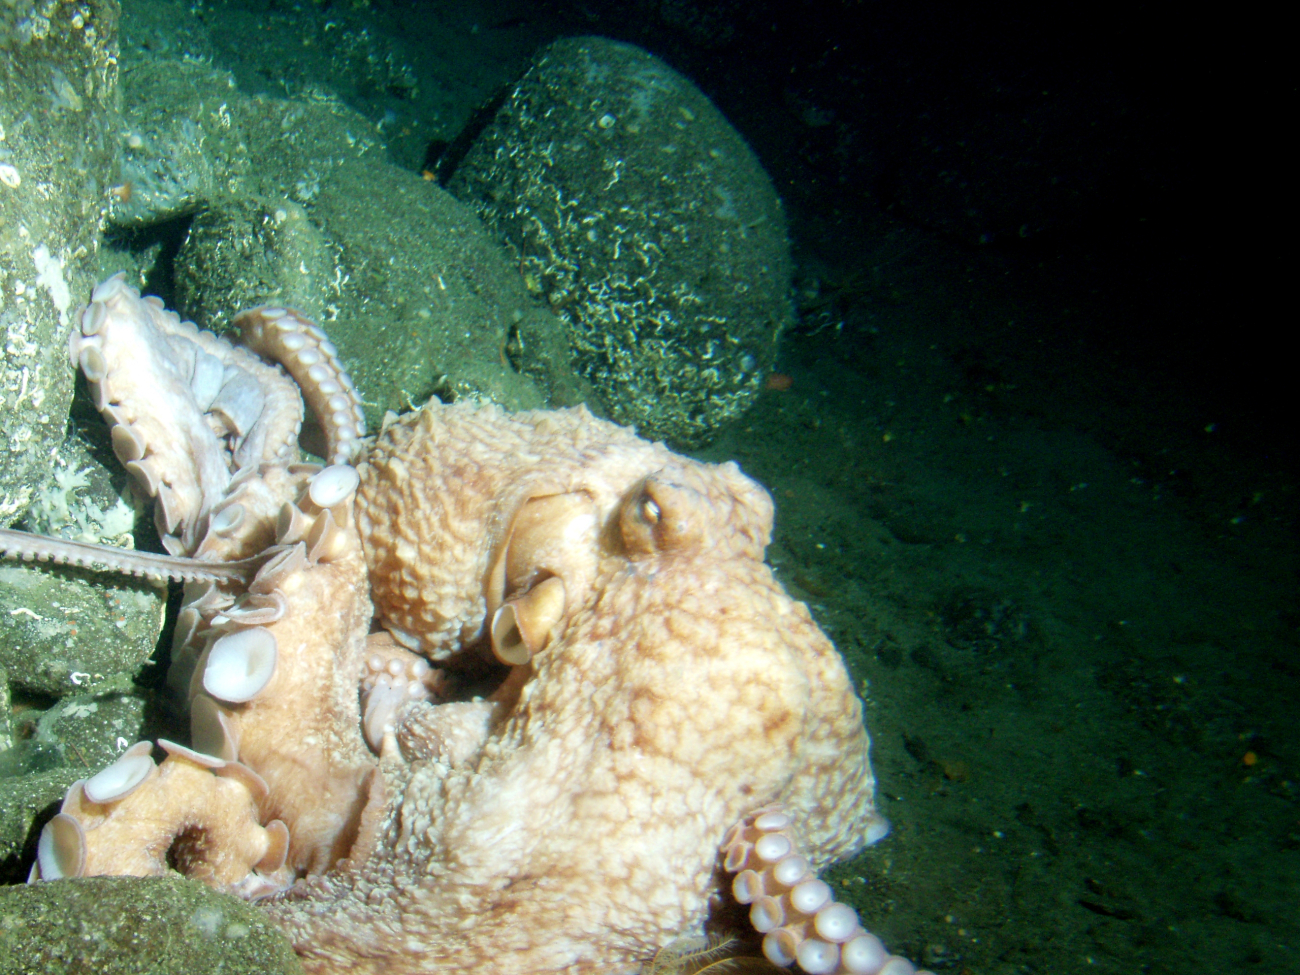 Giant pacific octopus (Octopus dofleini)  on boulder habitatat 115 meters depth